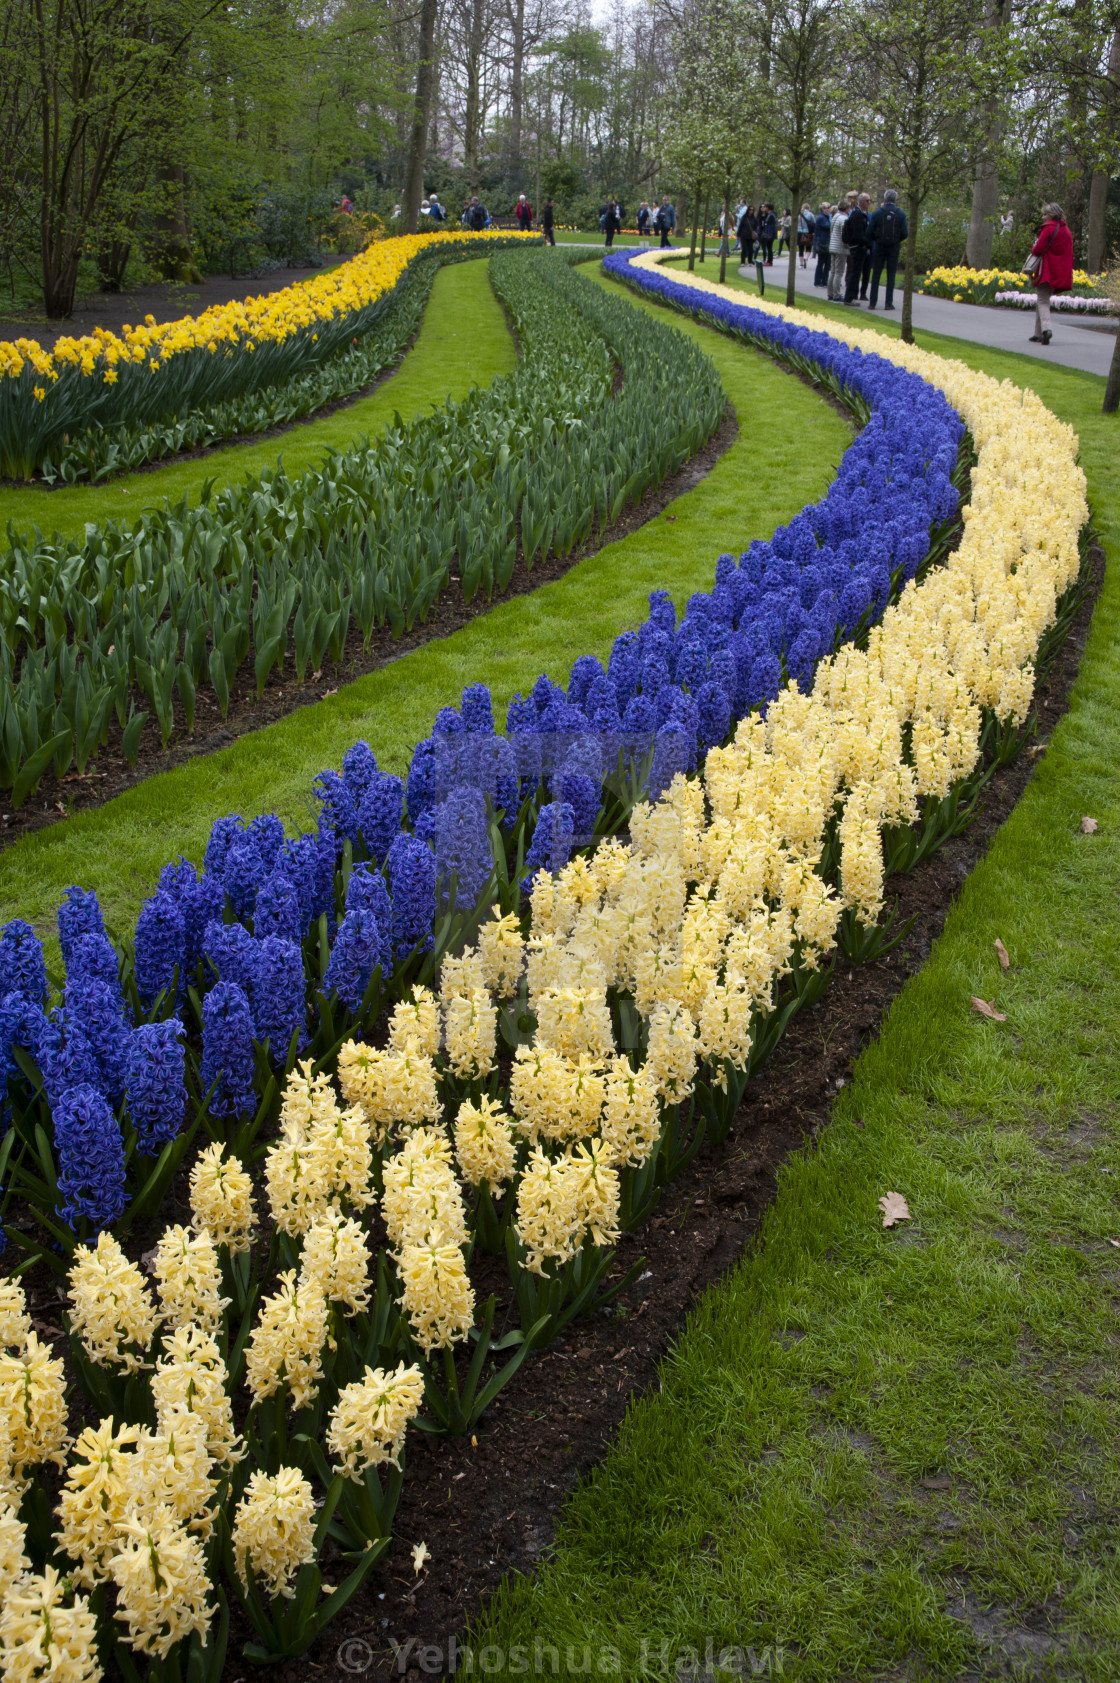 "The annual bloom at Keukenhof Tulip and Flower Garden" stock image